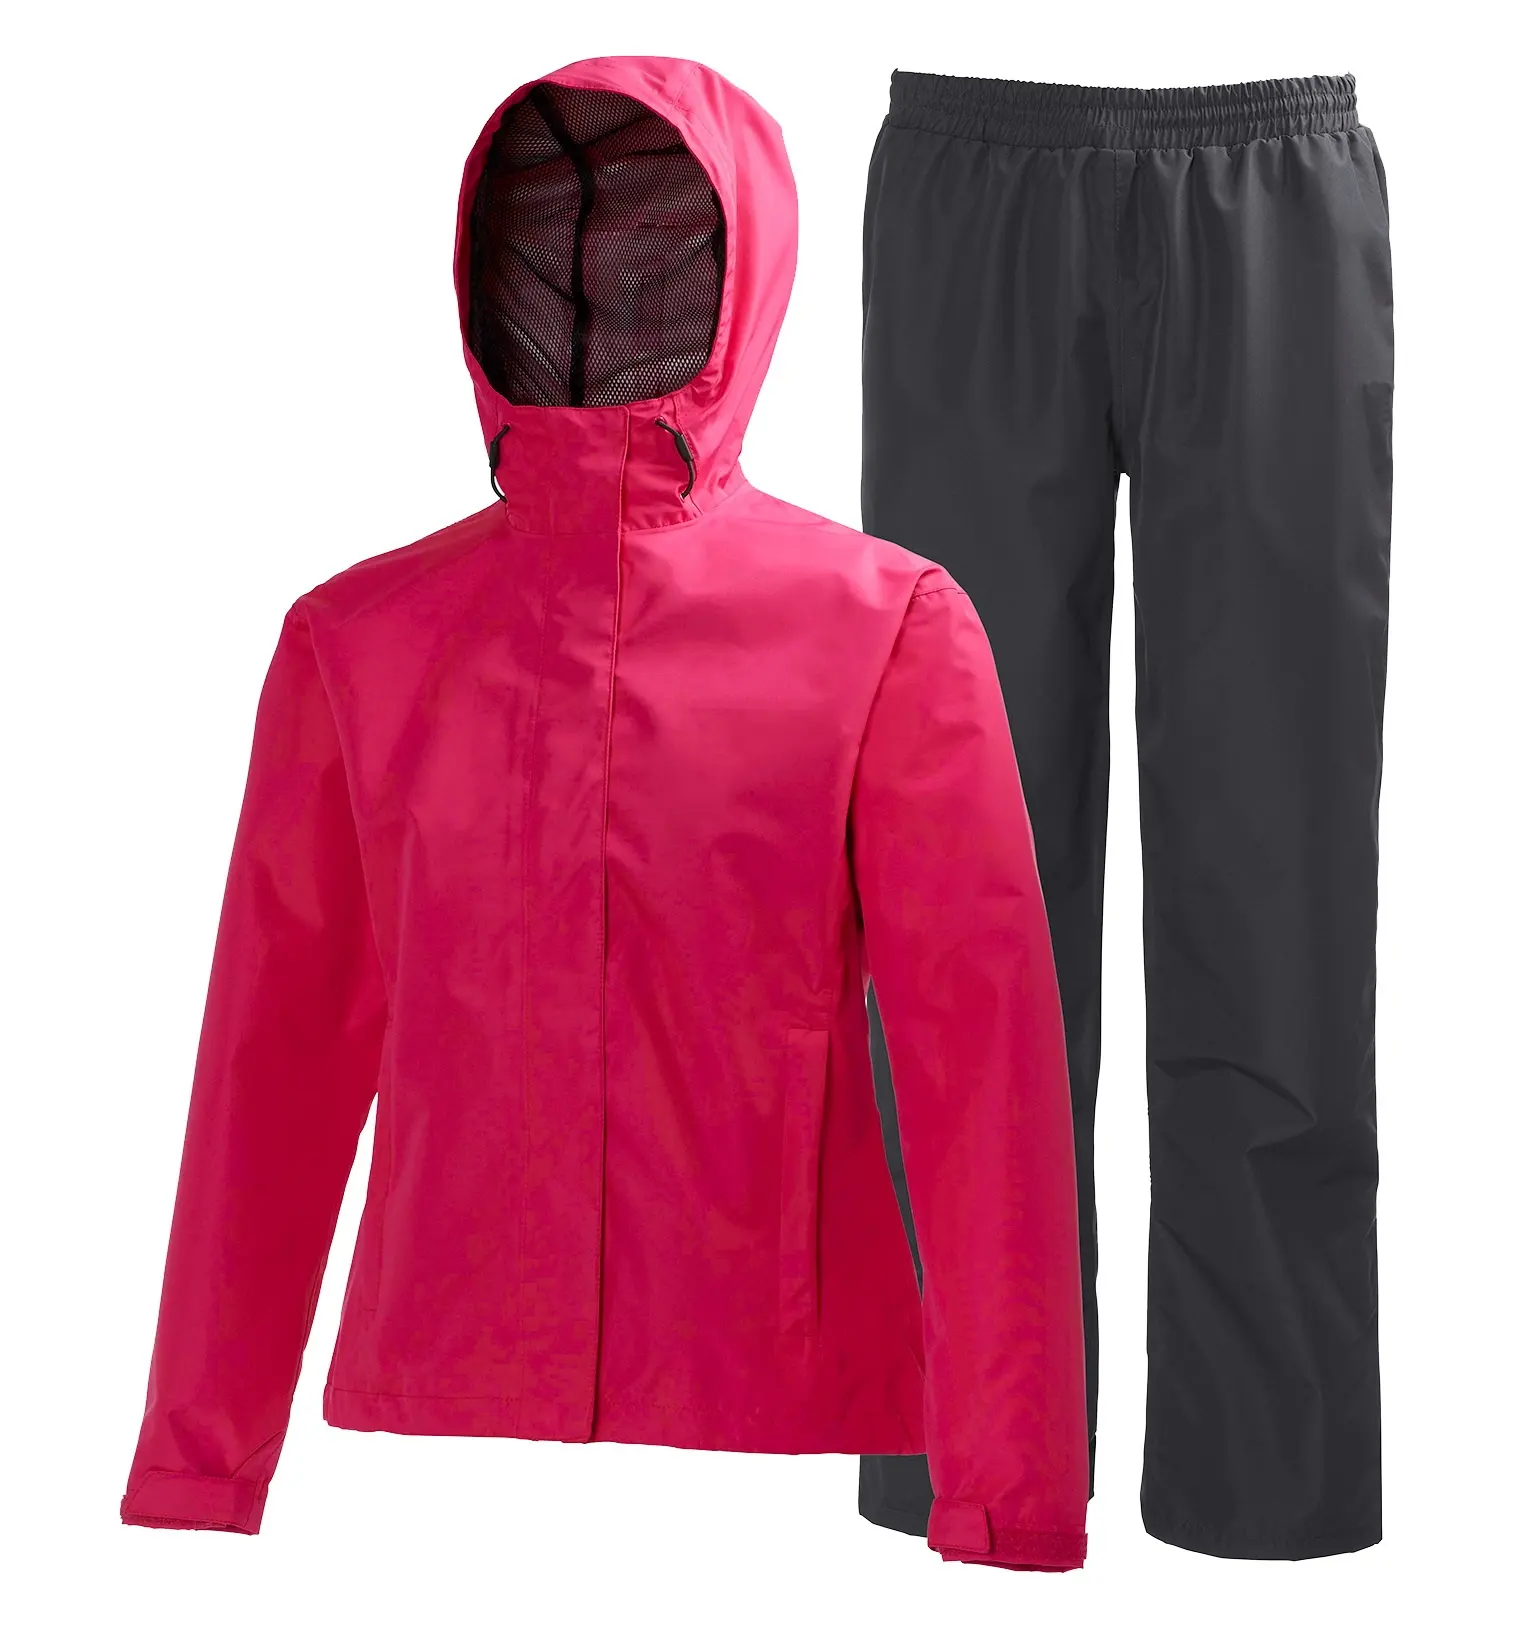 Ladies Nylon Raincoat Waterproof and Rain Pants Set for Back to School Casual Wear Outdoor Sports Running Hiking Fishing